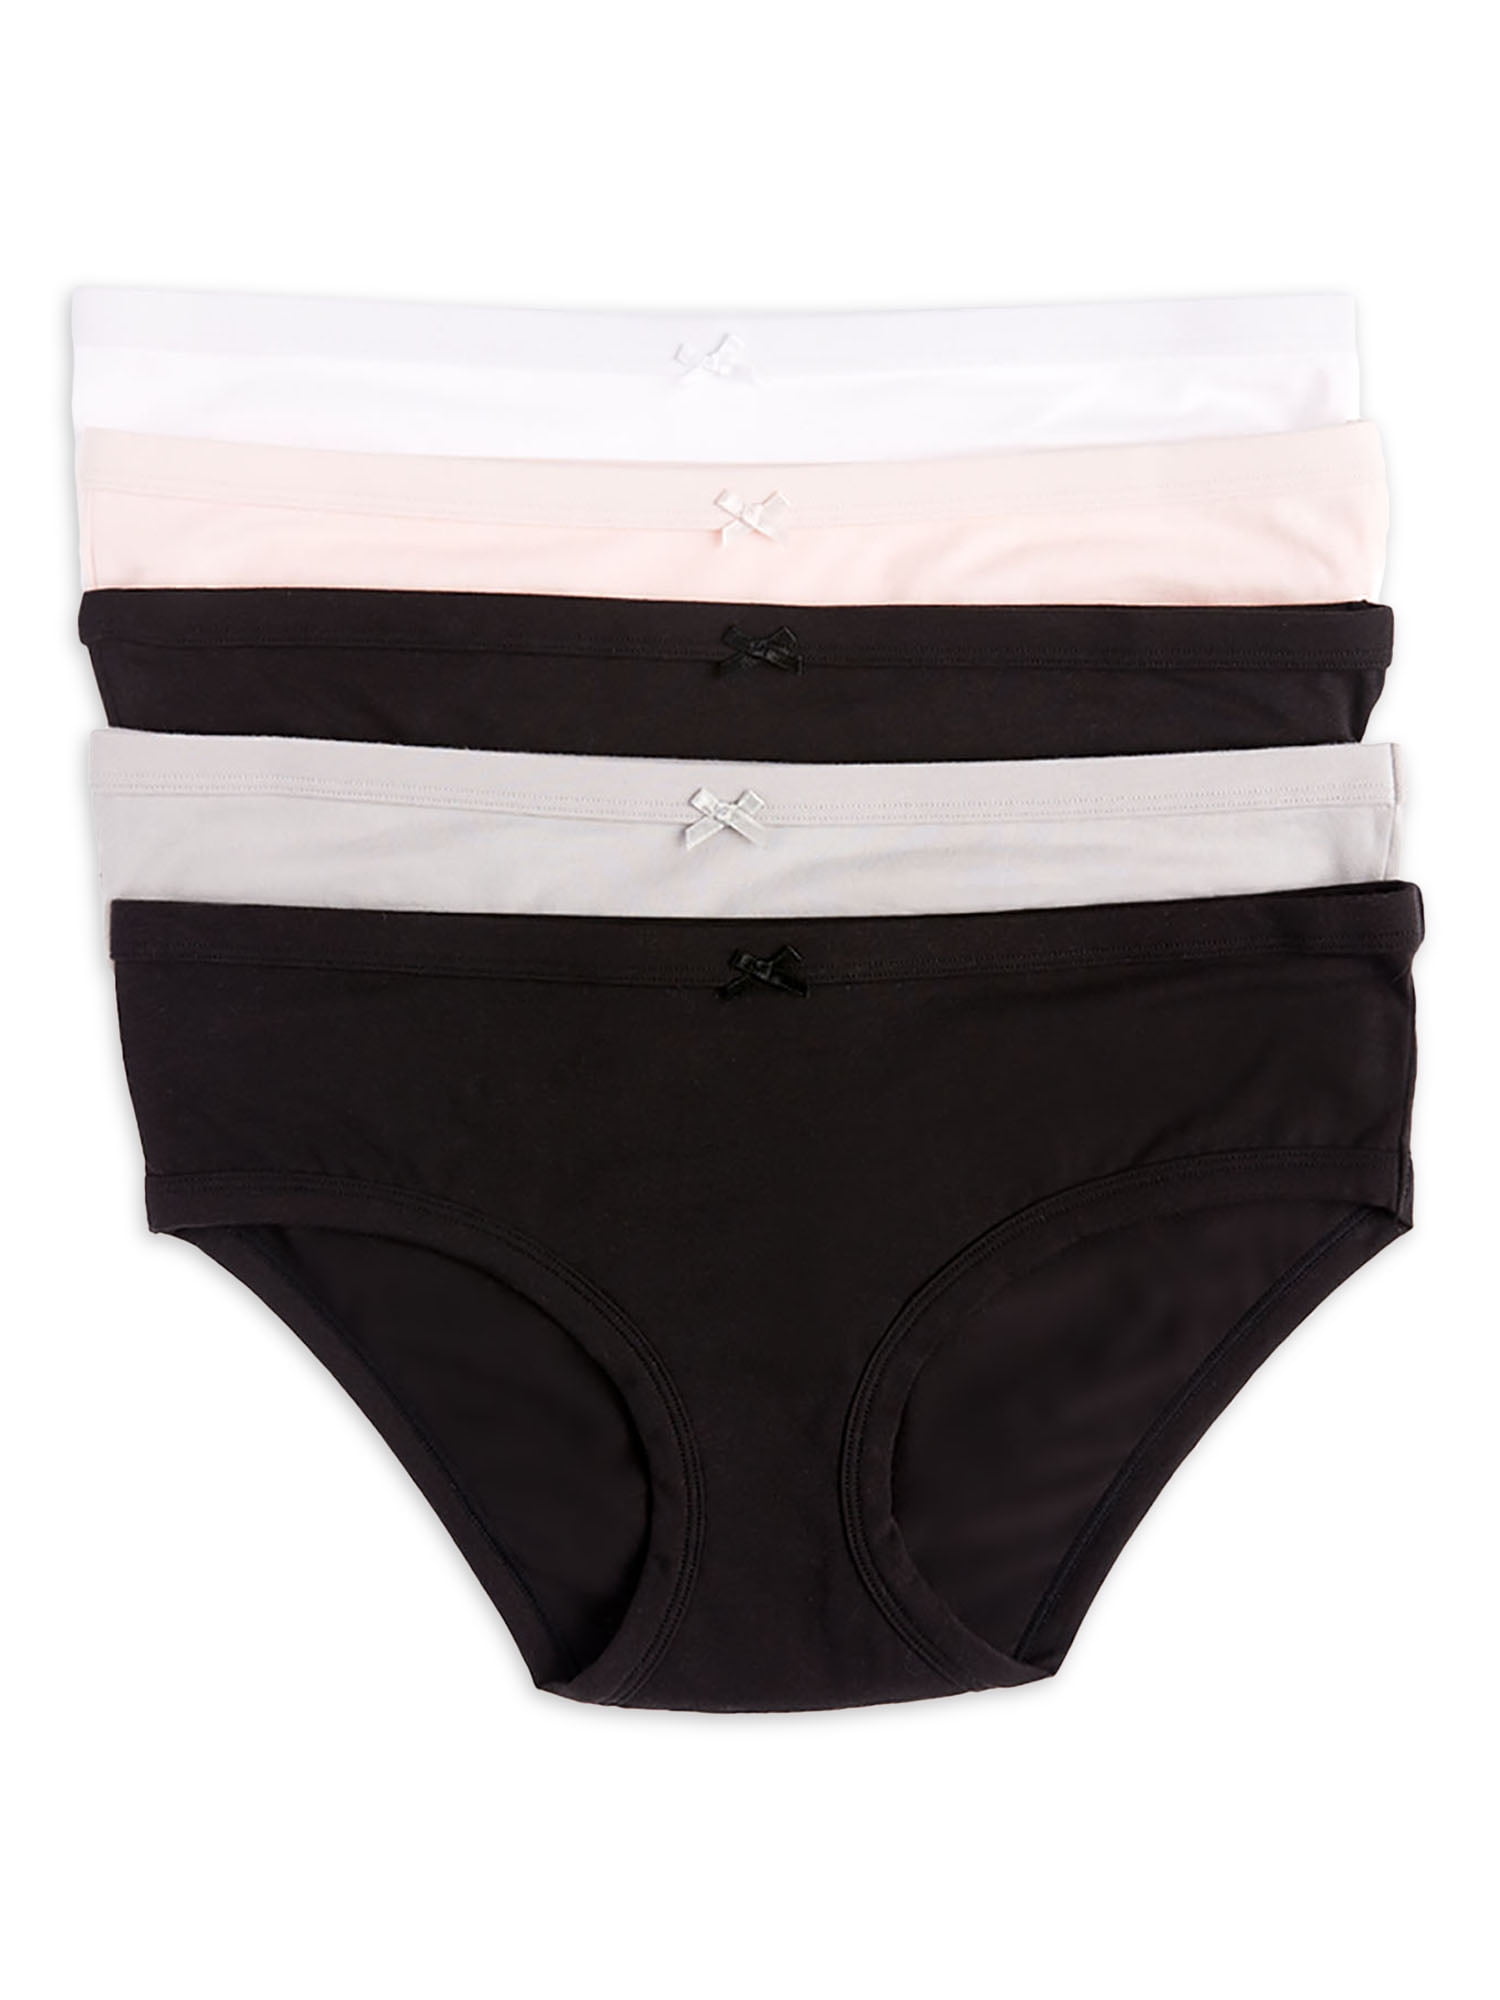 brandon b hendricks add female underwear models tumblr photo